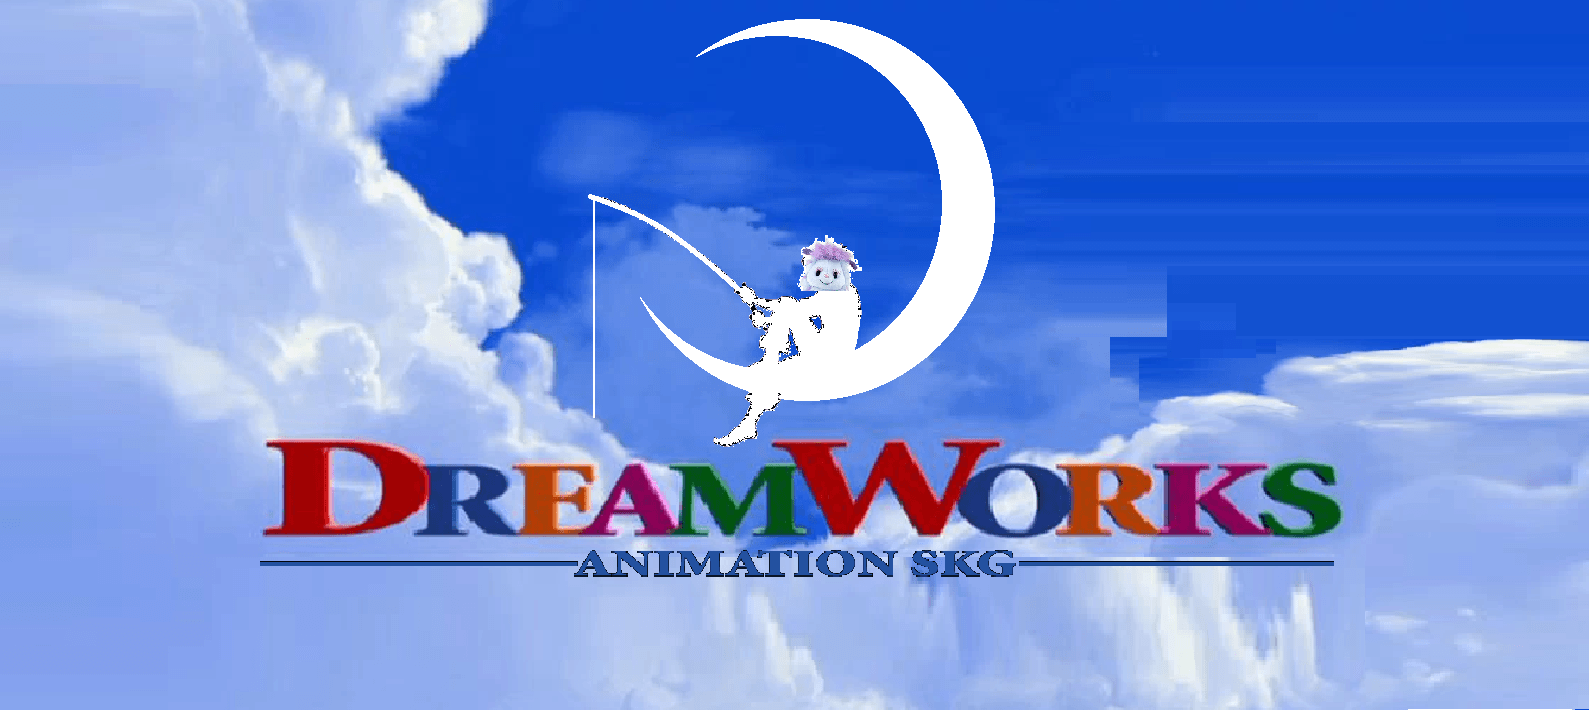 DreamWorks 2018 Logo - Image - DreamWorks Animation logo (Barbie Version).png | The Idea ...